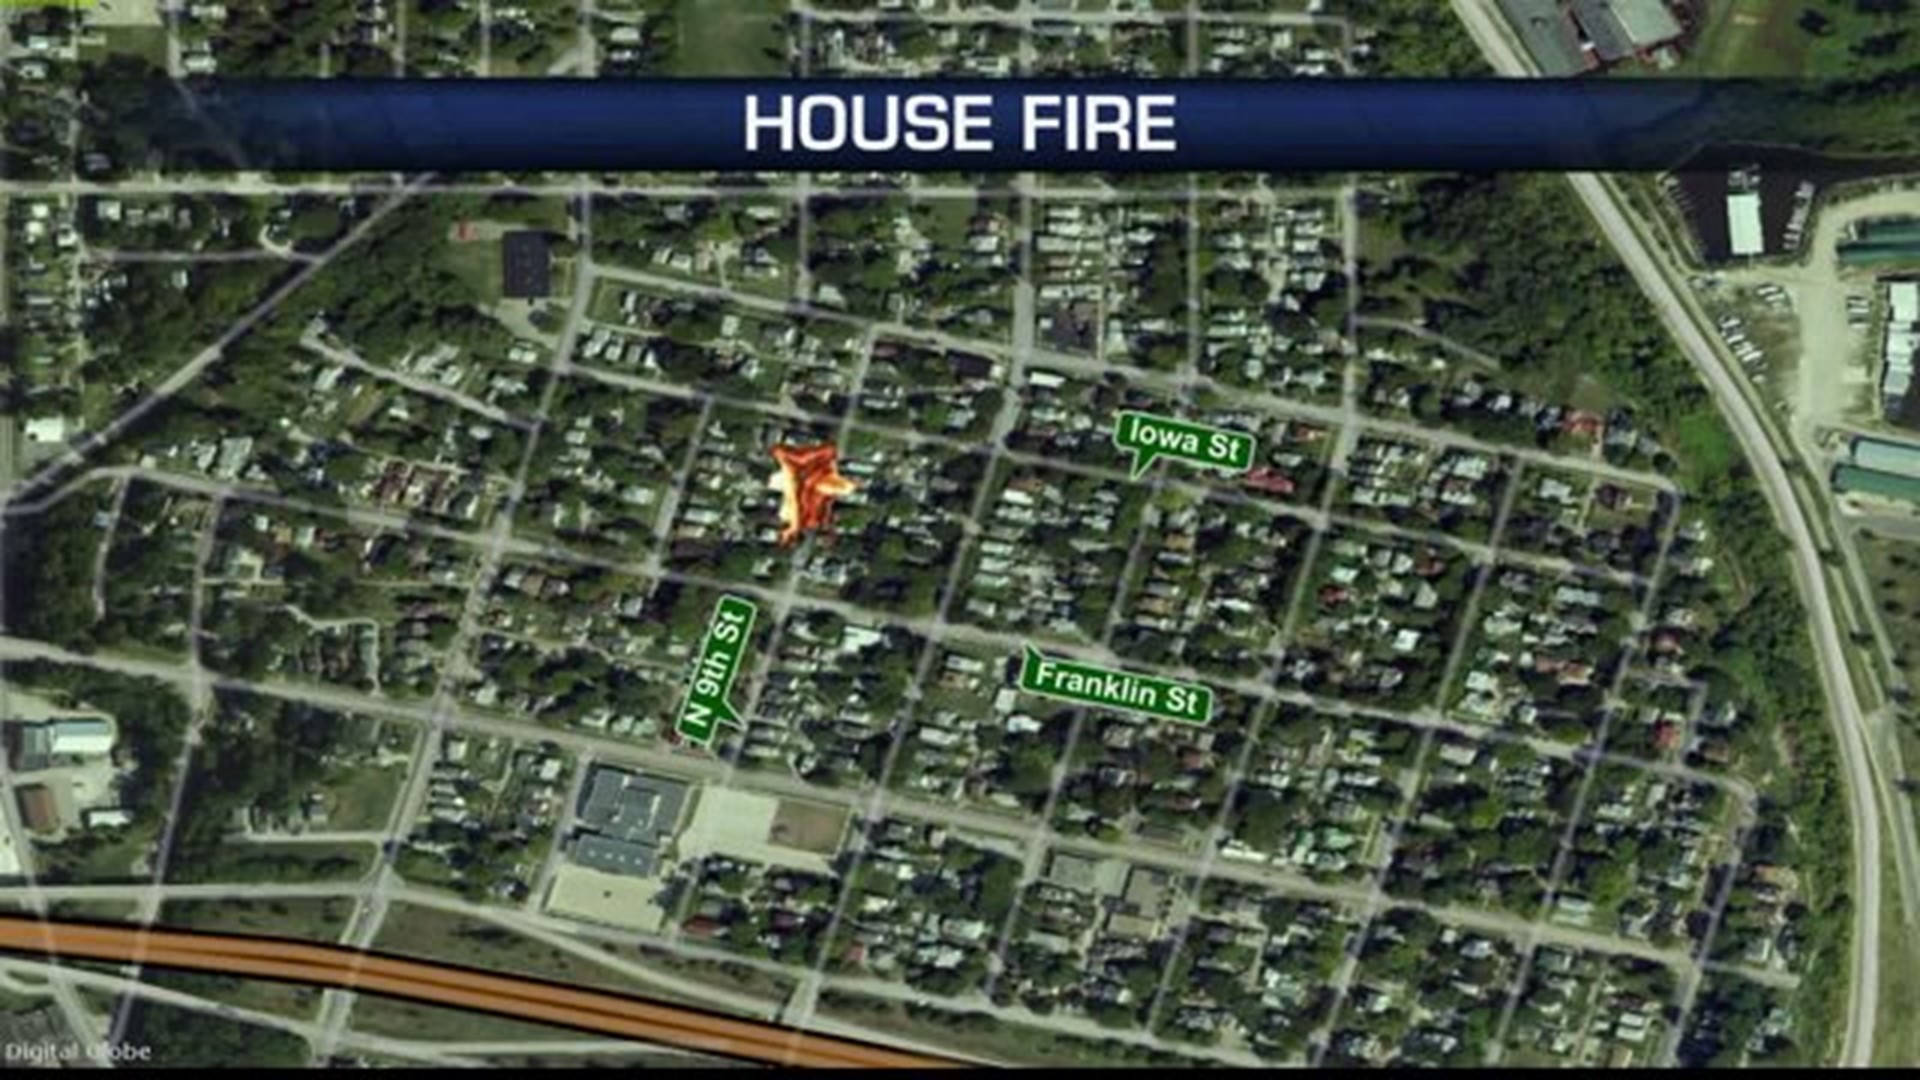 Fire in Burlington is "considered suspicious"